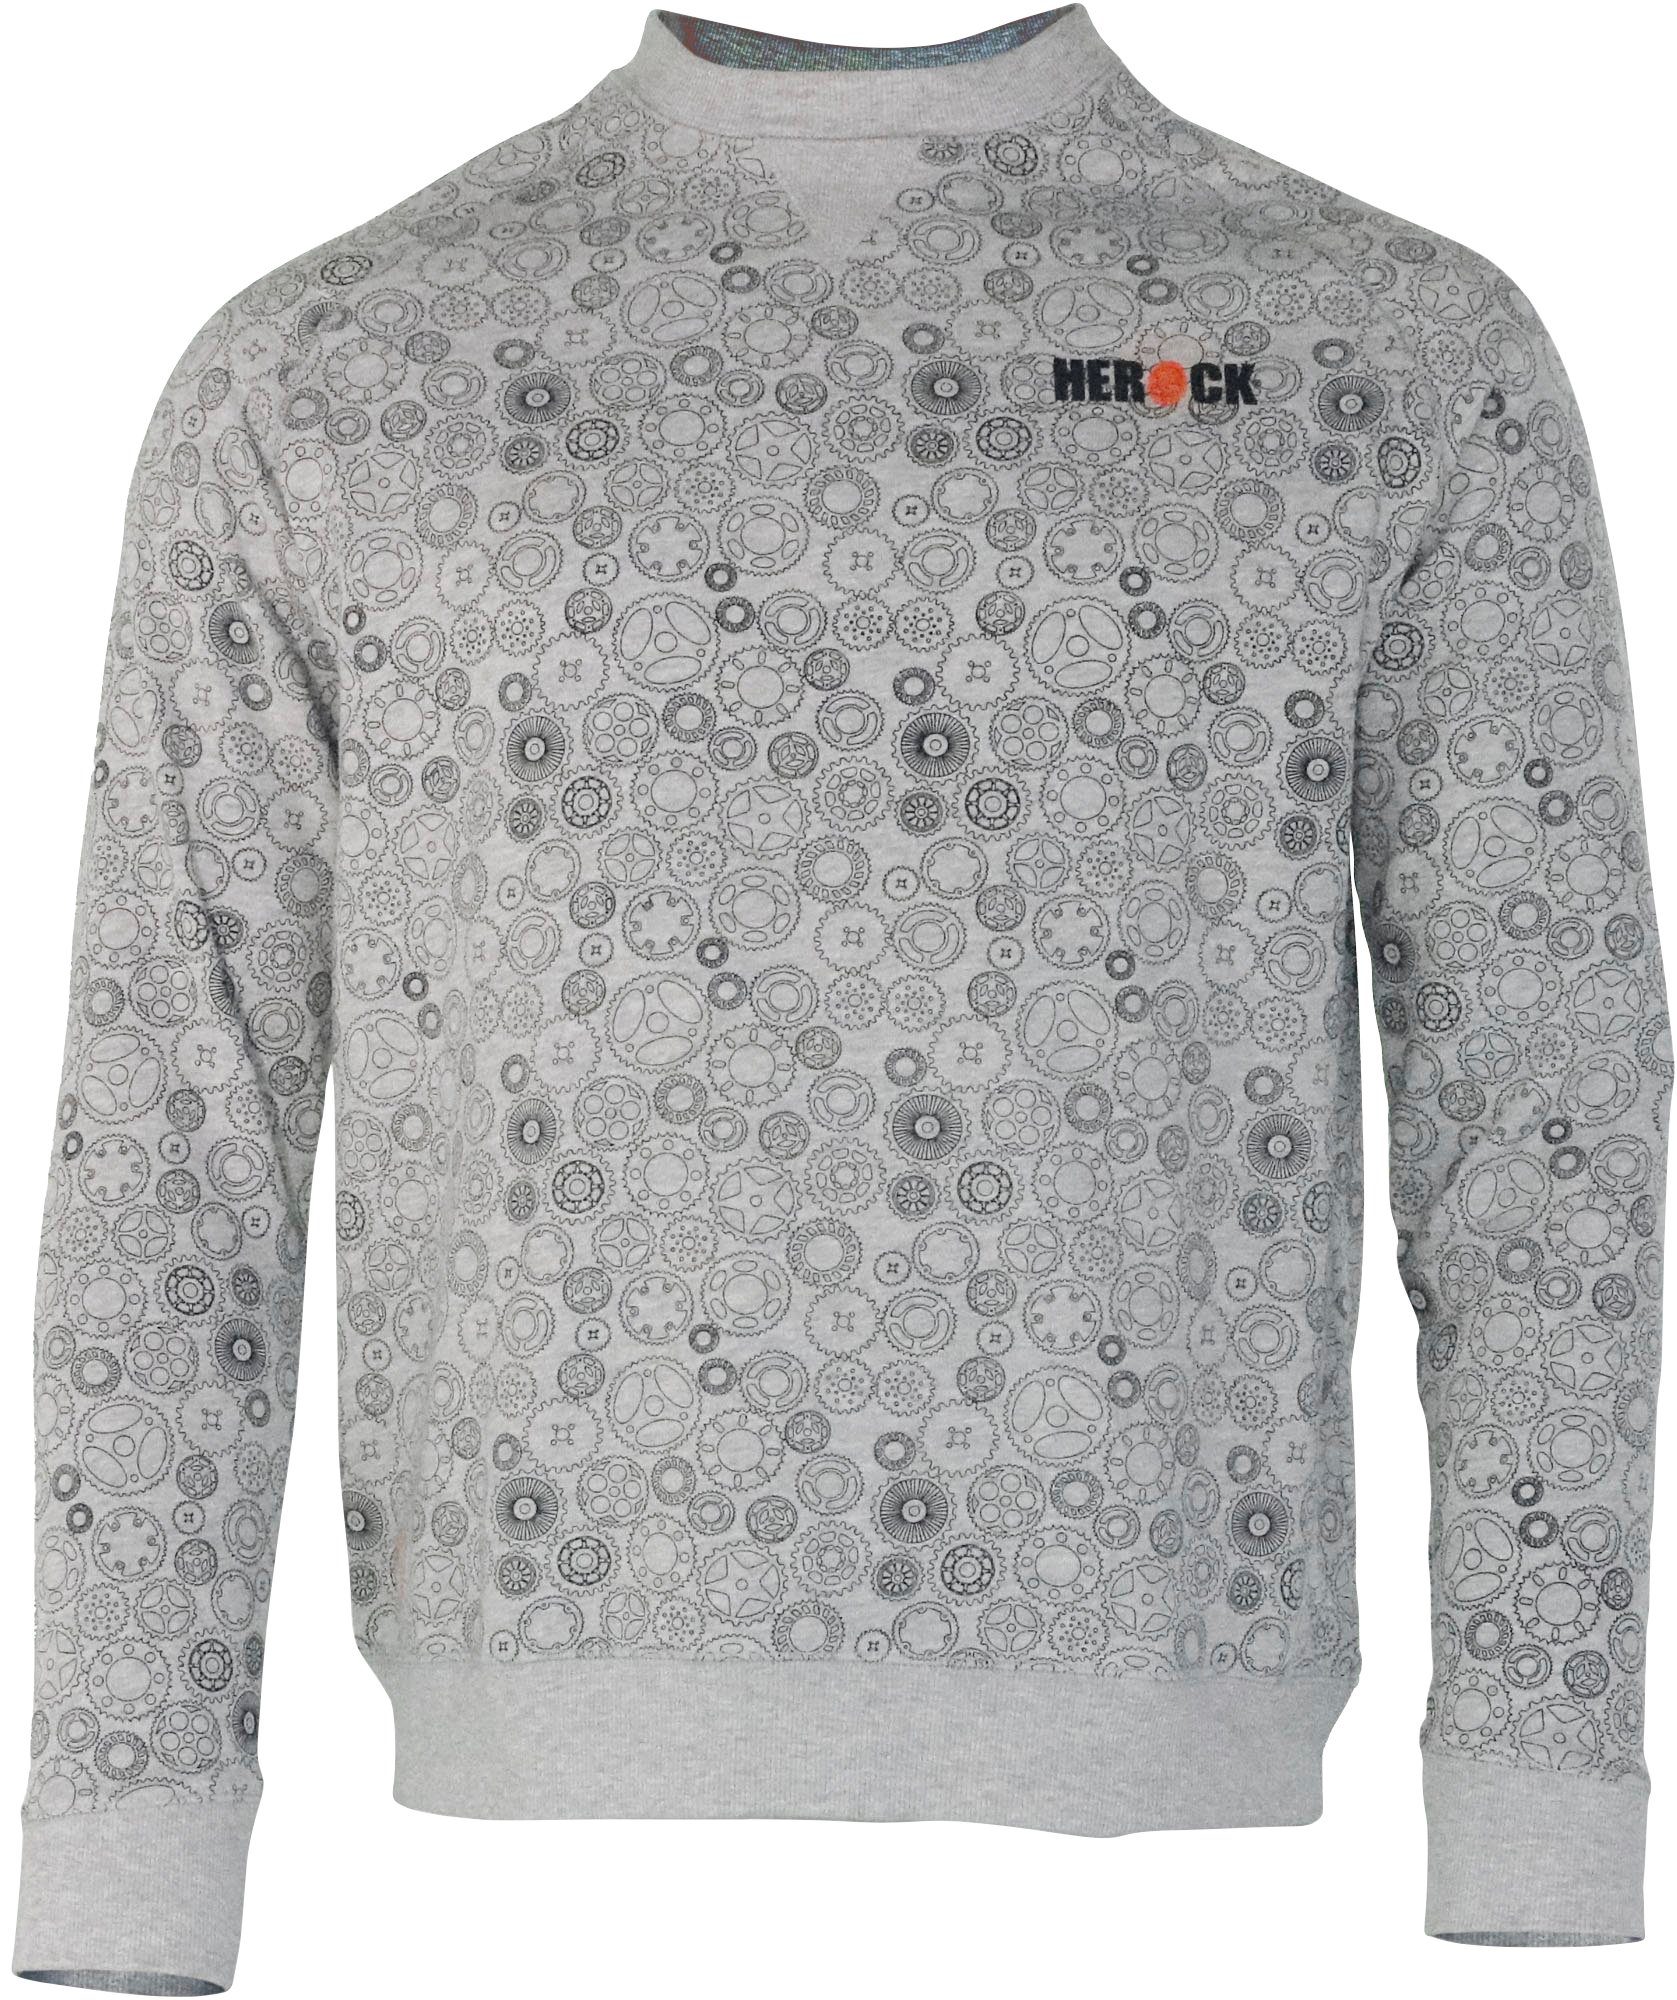 Herock Sweater Engineer Mit Zahnrad-Muster & Herock®-Aufdruck, angenehmes  Tragegefühl | Shirts